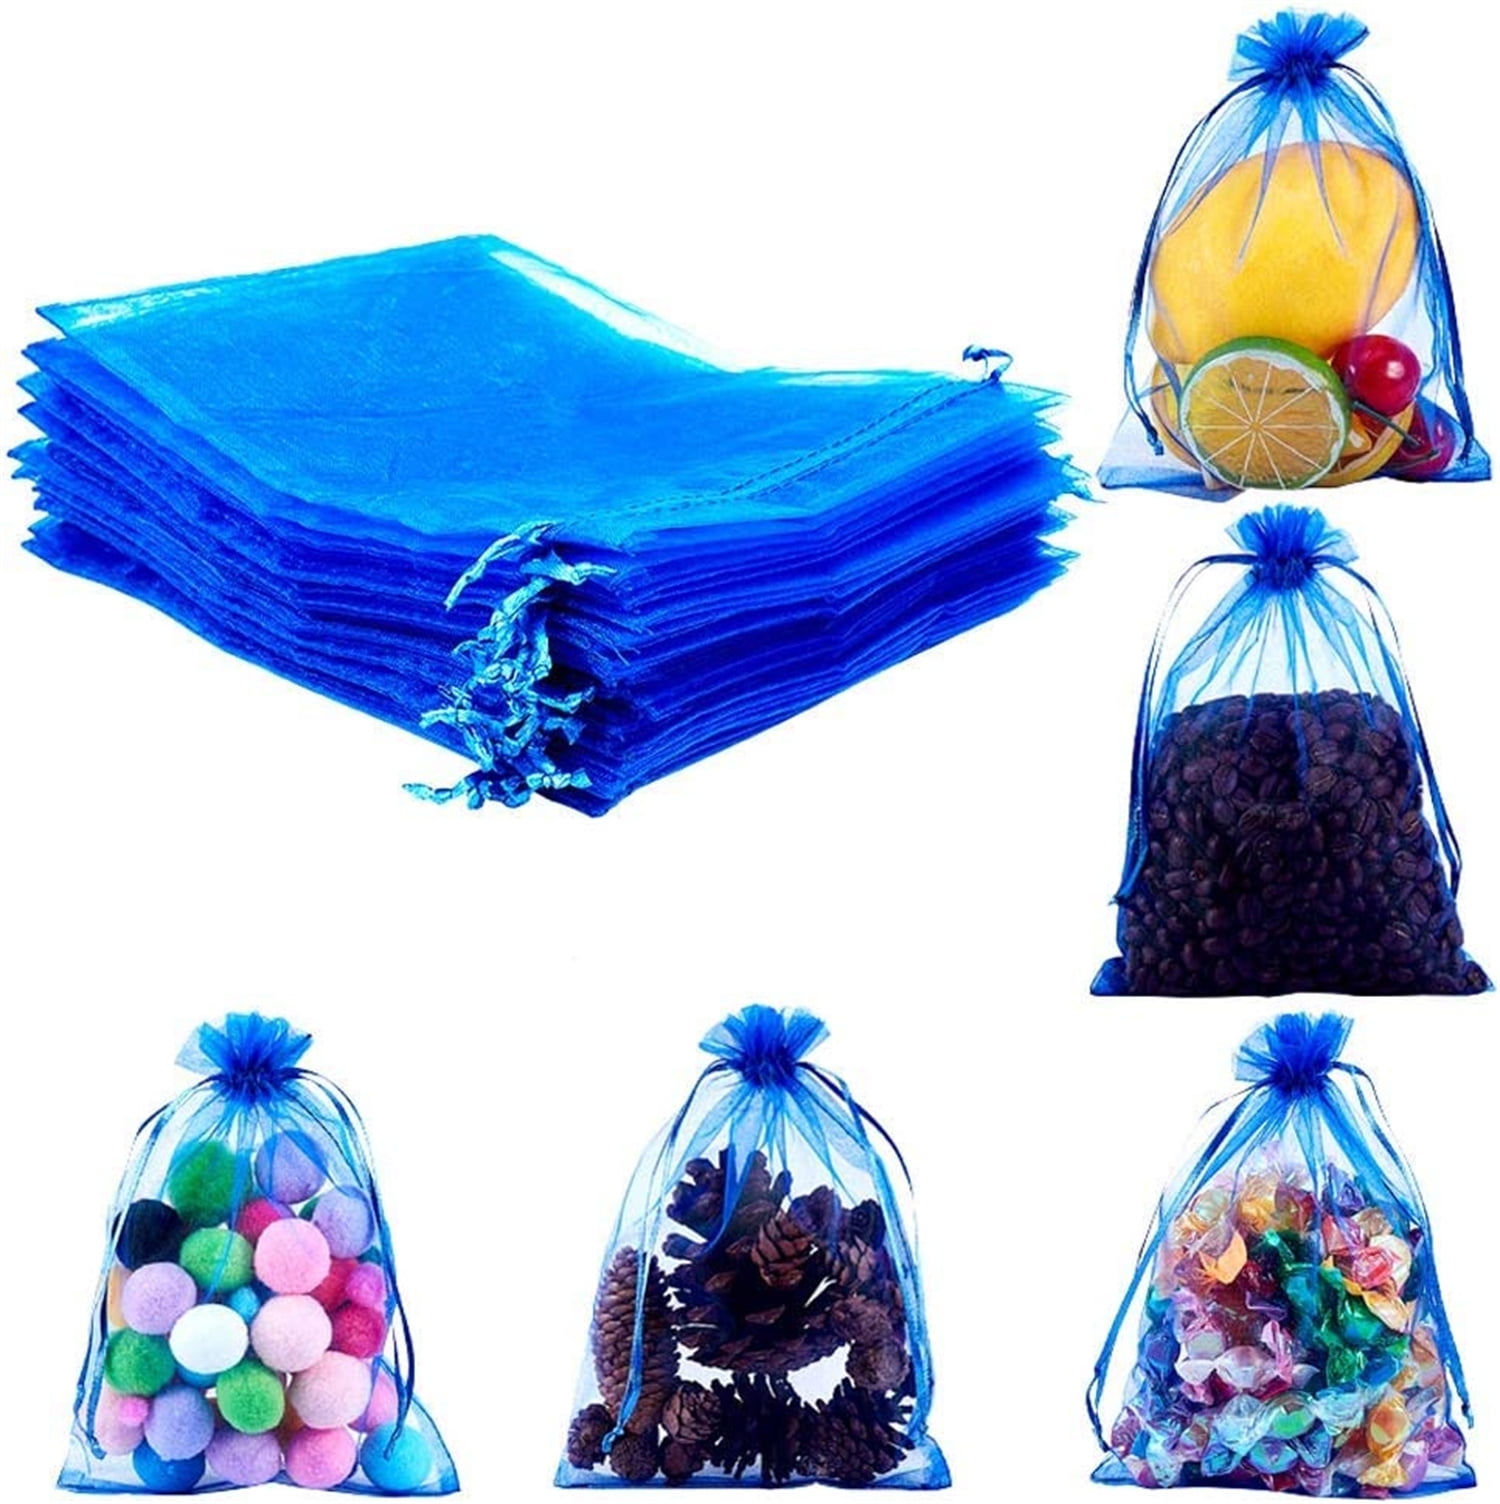 100 Pcs 5x7 inches Gift Wrap Bags Blue, Organza Sheer See Through